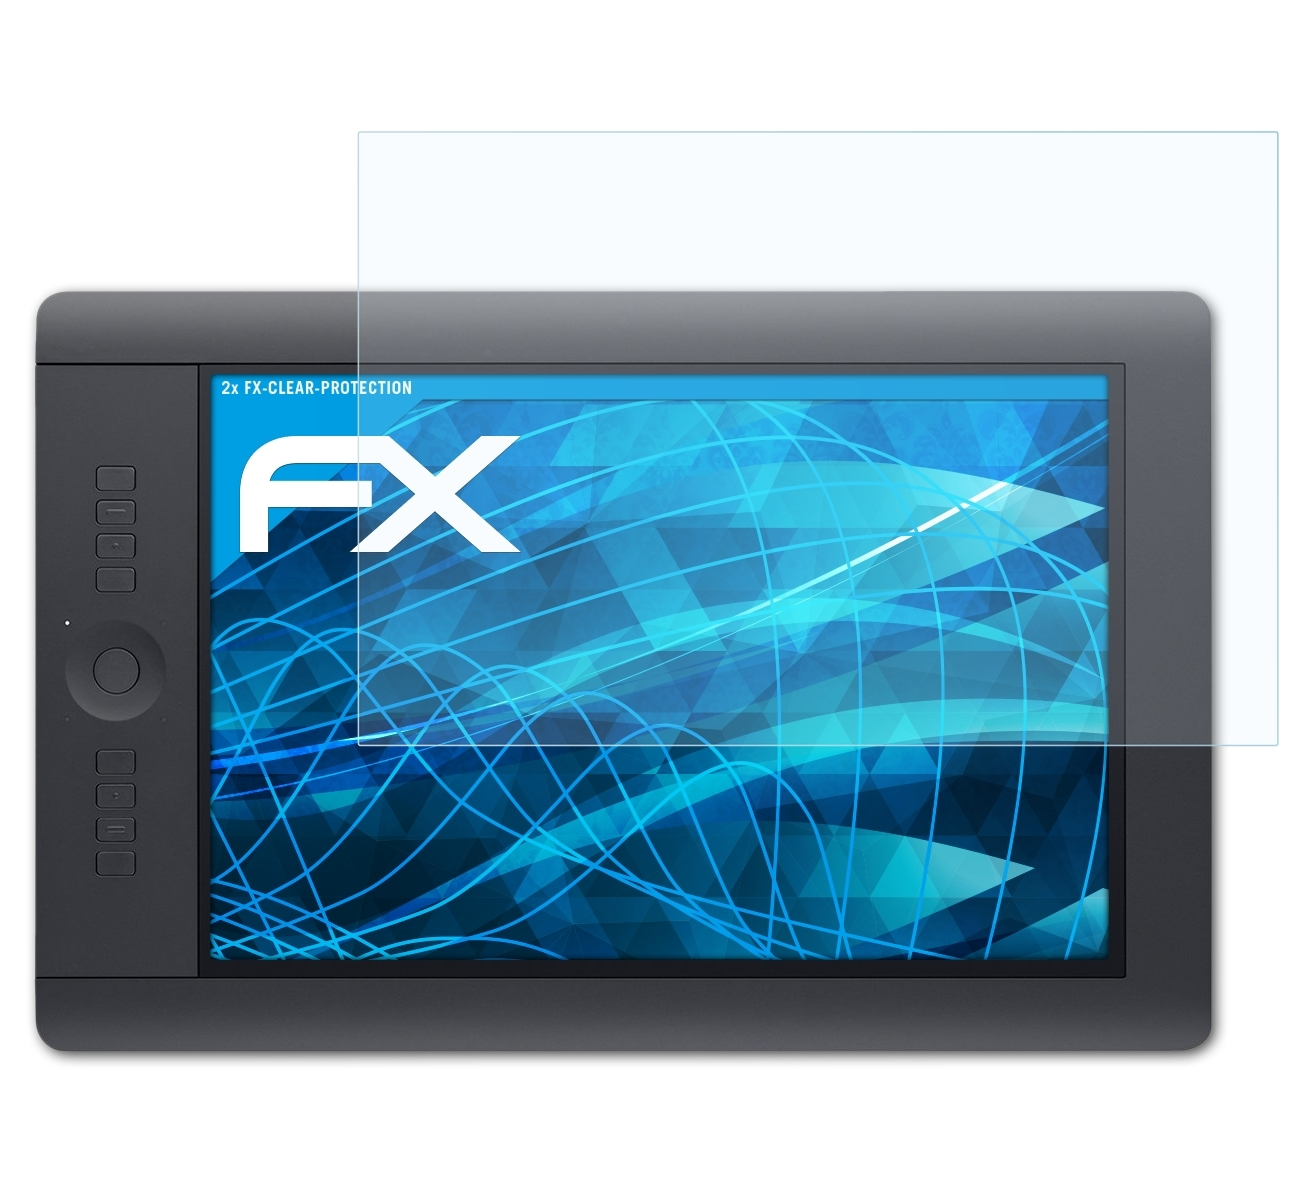 ATFOLIX 2x FX-Clear Displayschutz(für Wacom touch INTUOS5 Large)